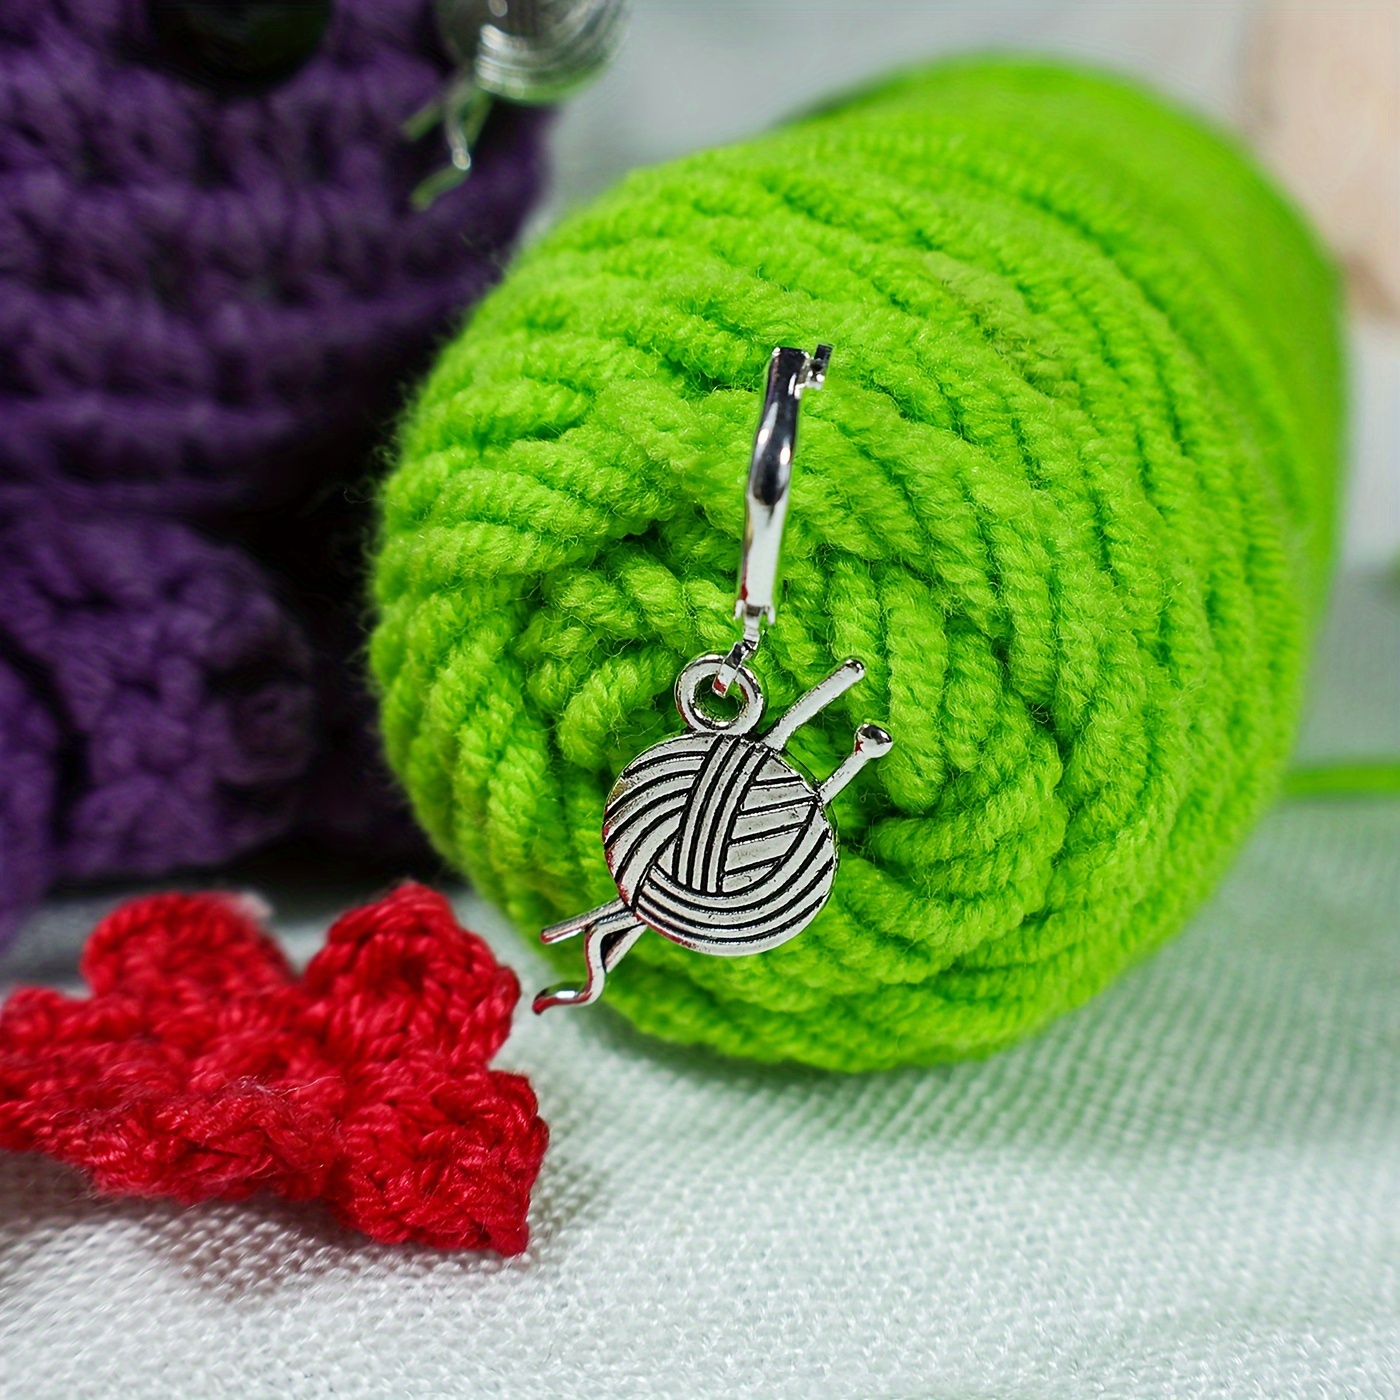 6PCS Stitch Markers Stitching Holders Knitting Crochet Metal Pins Needle  Clips